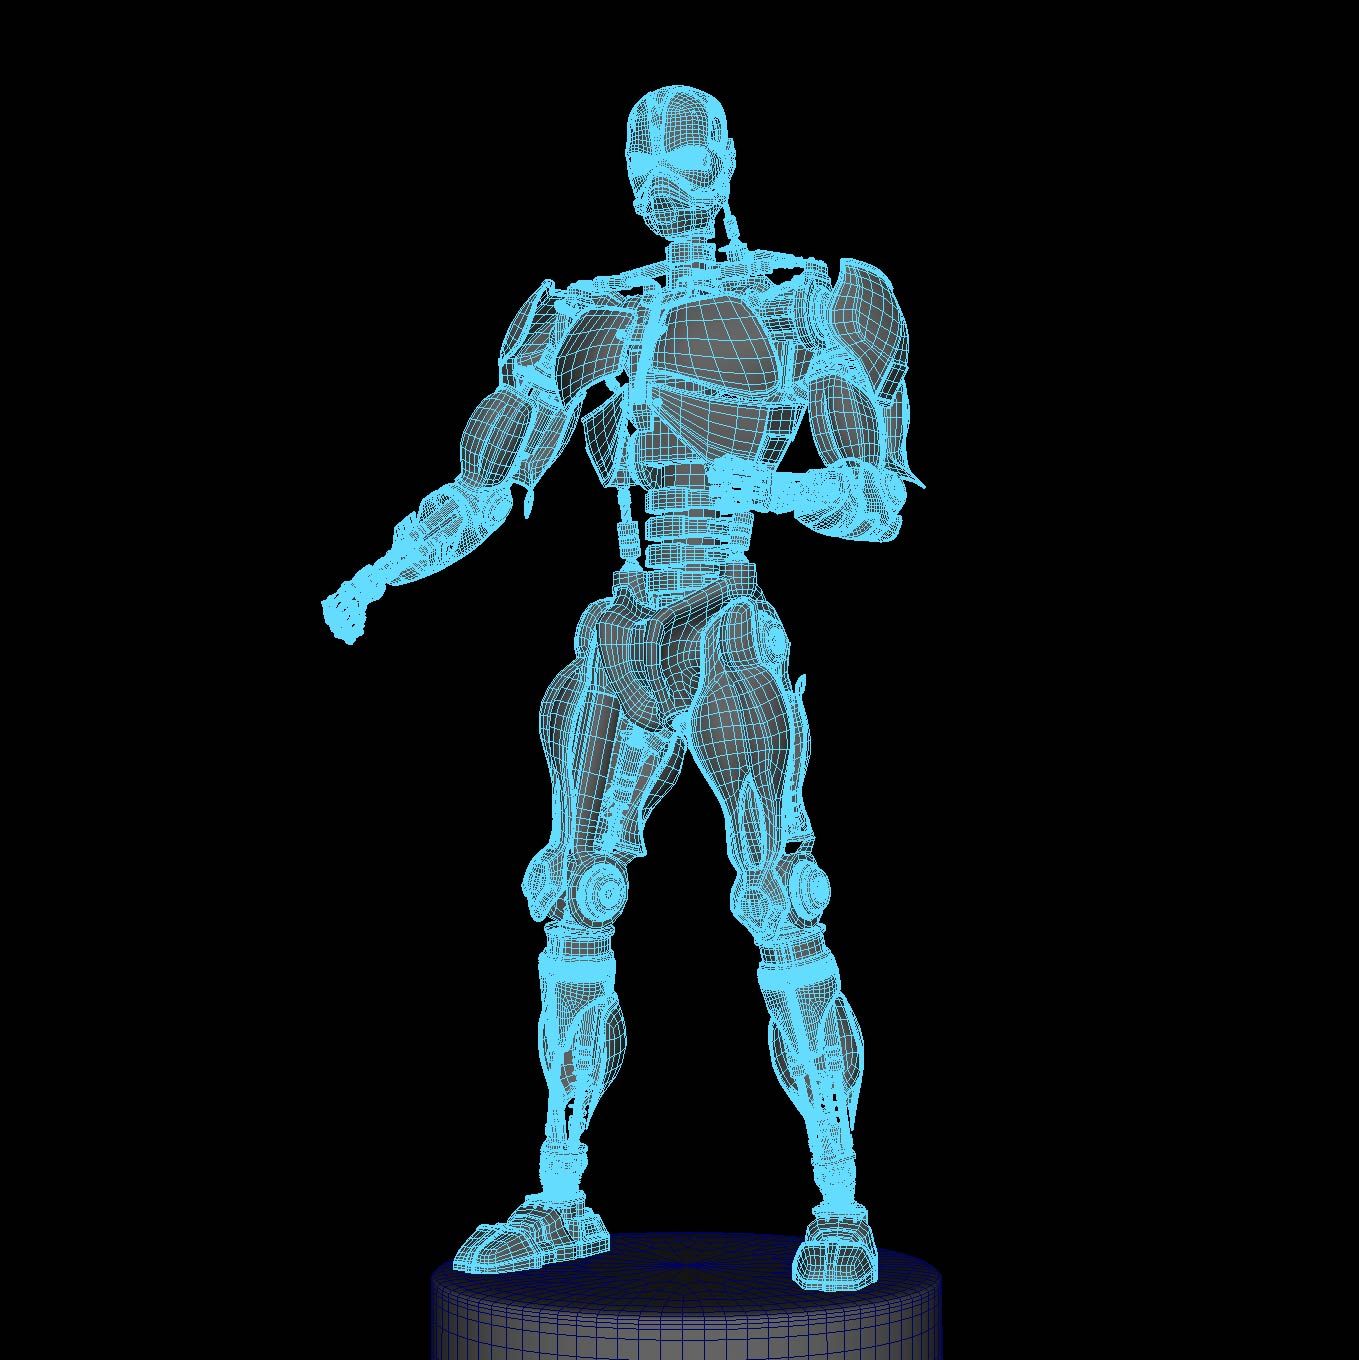 Advanced-Rigged-Terminator-3D-Model-Cutting-Edge-Cybernetic-Design-wireframe